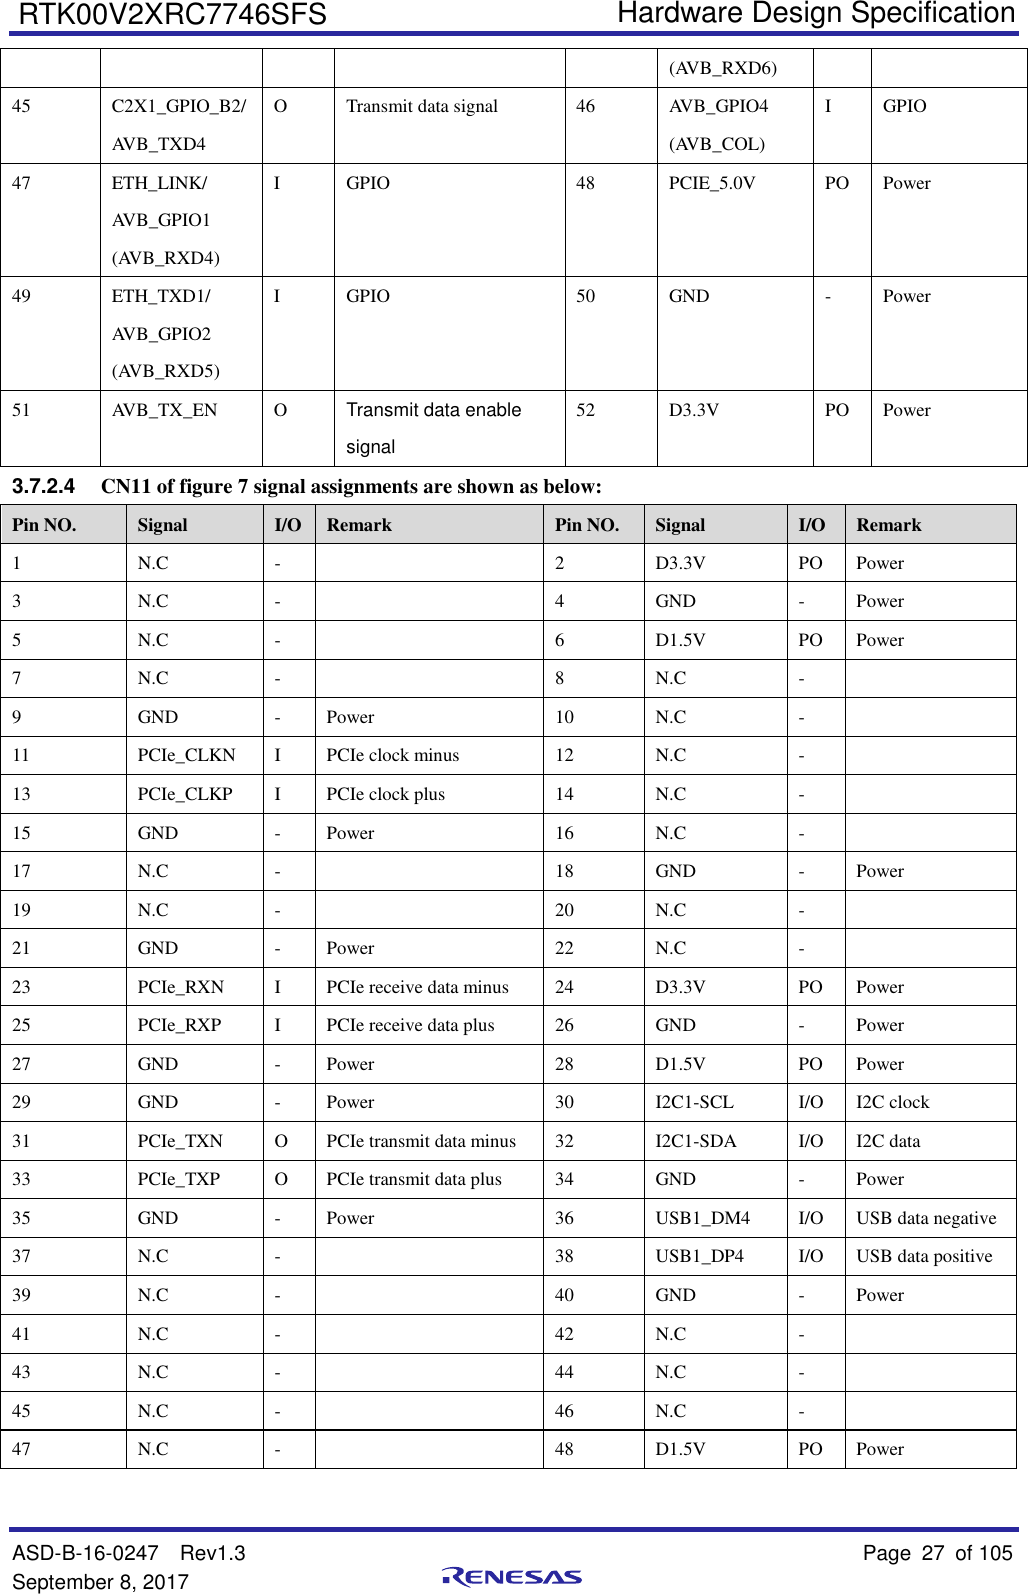   Hardware Design Specification ASD-B-16-0247  Rev1.3    Page 27  of 105 September 8, 2017      RTK00V2XRC7746SFS (AVB_RXD6) 45 C2X1_GPIO_B2/ AVB_TXD4 O Transmit data signal 46 AVB_GPIO4 (AVB_COL) I GPIO 47 ETH_LINK/ AVB_GPIO1 (AVB_RXD4) I GPIO 48 PCIE_5.0V PO Power 49 ETH_TXD1/ AVB_GPIO2 (AVB_RXD5) I GPIO 50 GND - Power 51 AVB_TX_EN O Transmit data enable signal 52 D3.3V PO Power 3.7.2.4  CN11 of figure 7 signal assignments are shown as below: Pin NO. Signal I/O Remark Pin NO. Signal I/O Remark 1 N.C -  2 D3.3V PO Power 3 N.C -  4 GND - Power 5 N.C -  6 D1.5V PO Power 7 N.C -  8 N.C -  9 GND - Power 10 N.C -  11 PCIe_CLKN I PCIe clock minus 12 N.C -  13 PCIe_CLKP I PCIe clock plus 14 N.C -  15 GND - Power 16 N.C -  17 N.C -  18 GND - Power 19 N.C -  20 N.C -  21 GND - Power 22 N.C -  23 PCIe_RXN I PCIe receive data minus 24 D3.3V PO Power 25 PCIe_RXP I PCIe receive data plus 26 GND - Power 27 GND - Power 28 D1.5V PO Power 29 GND - Power 30 I2C1-SCL I/O I2C clock 31 PCIe_TXN O PCIe transmit data minus 32 I2C1-SDA I/O I2C data 33 PCIe_TXP O PCIe transmit data plus 34 GND - Power 35 GND - Power 36 USB1_DM4 I/O USB data negative 37 N.C -  38 USB1_DP4 I/O USB data positive 39 N.C -  40 GND - Power 41 N.C -  42 N.C -  43 N.C -  44 N.C -  45 N.C -  46 N.C -  47 N.C -  48 D1.5V PO Power 